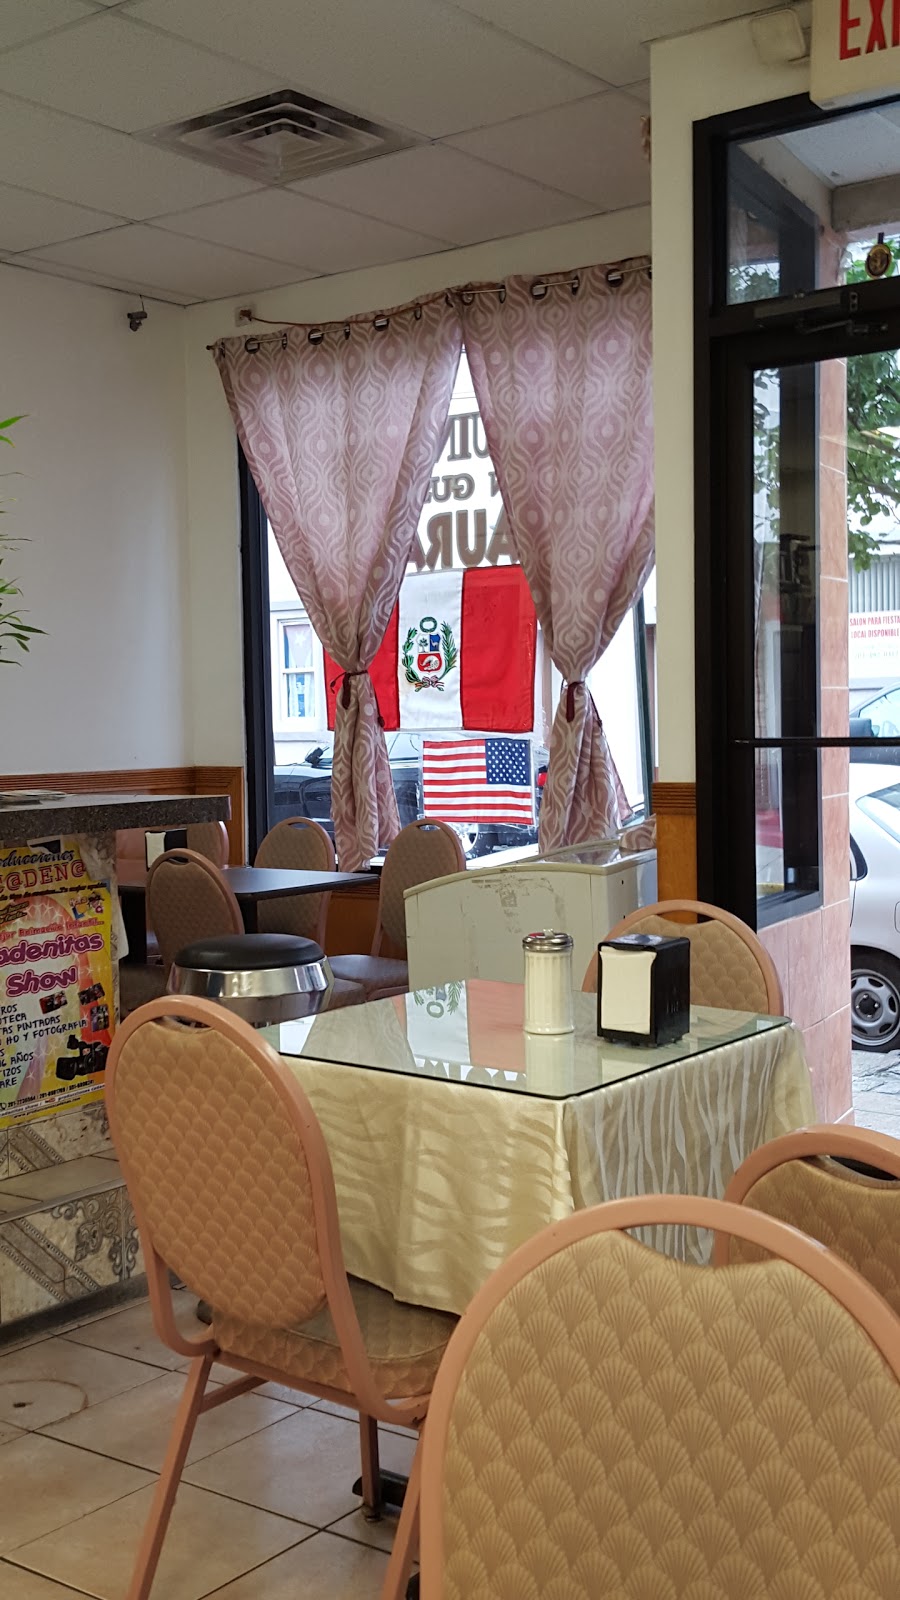 Photo of La Esquina Del Buen Gusto in Union City, New Jersey, United States - 1 Picture of Restaurant, Food, Point of interest, Establishment